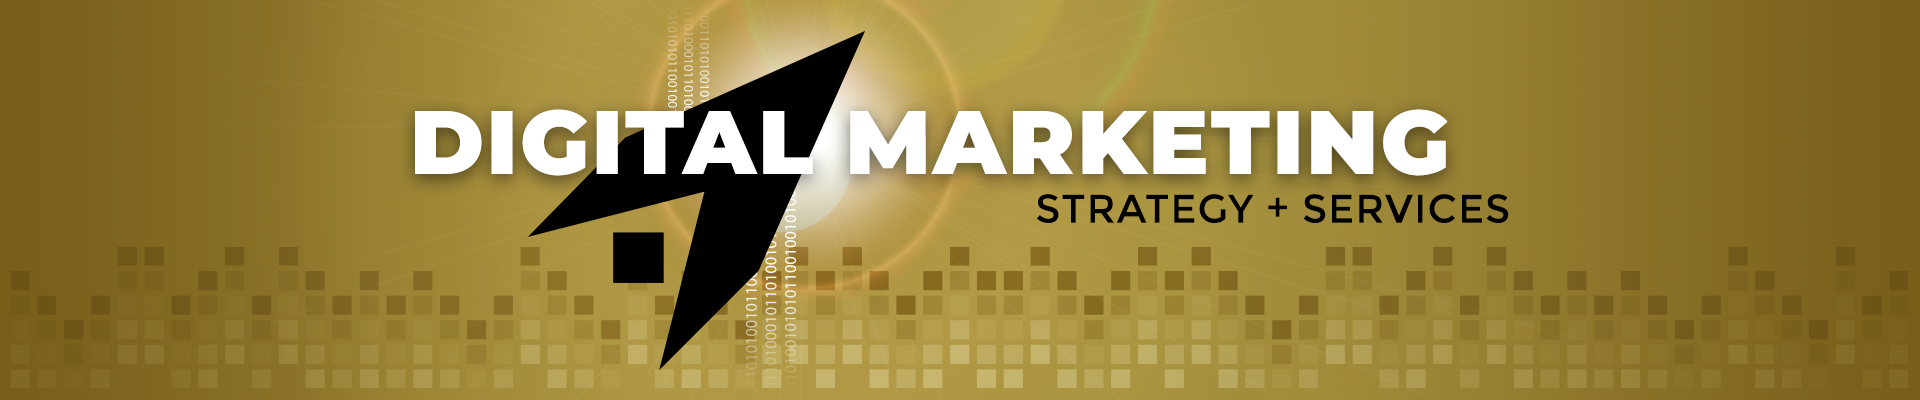 Digital Marketing Strategy + Services